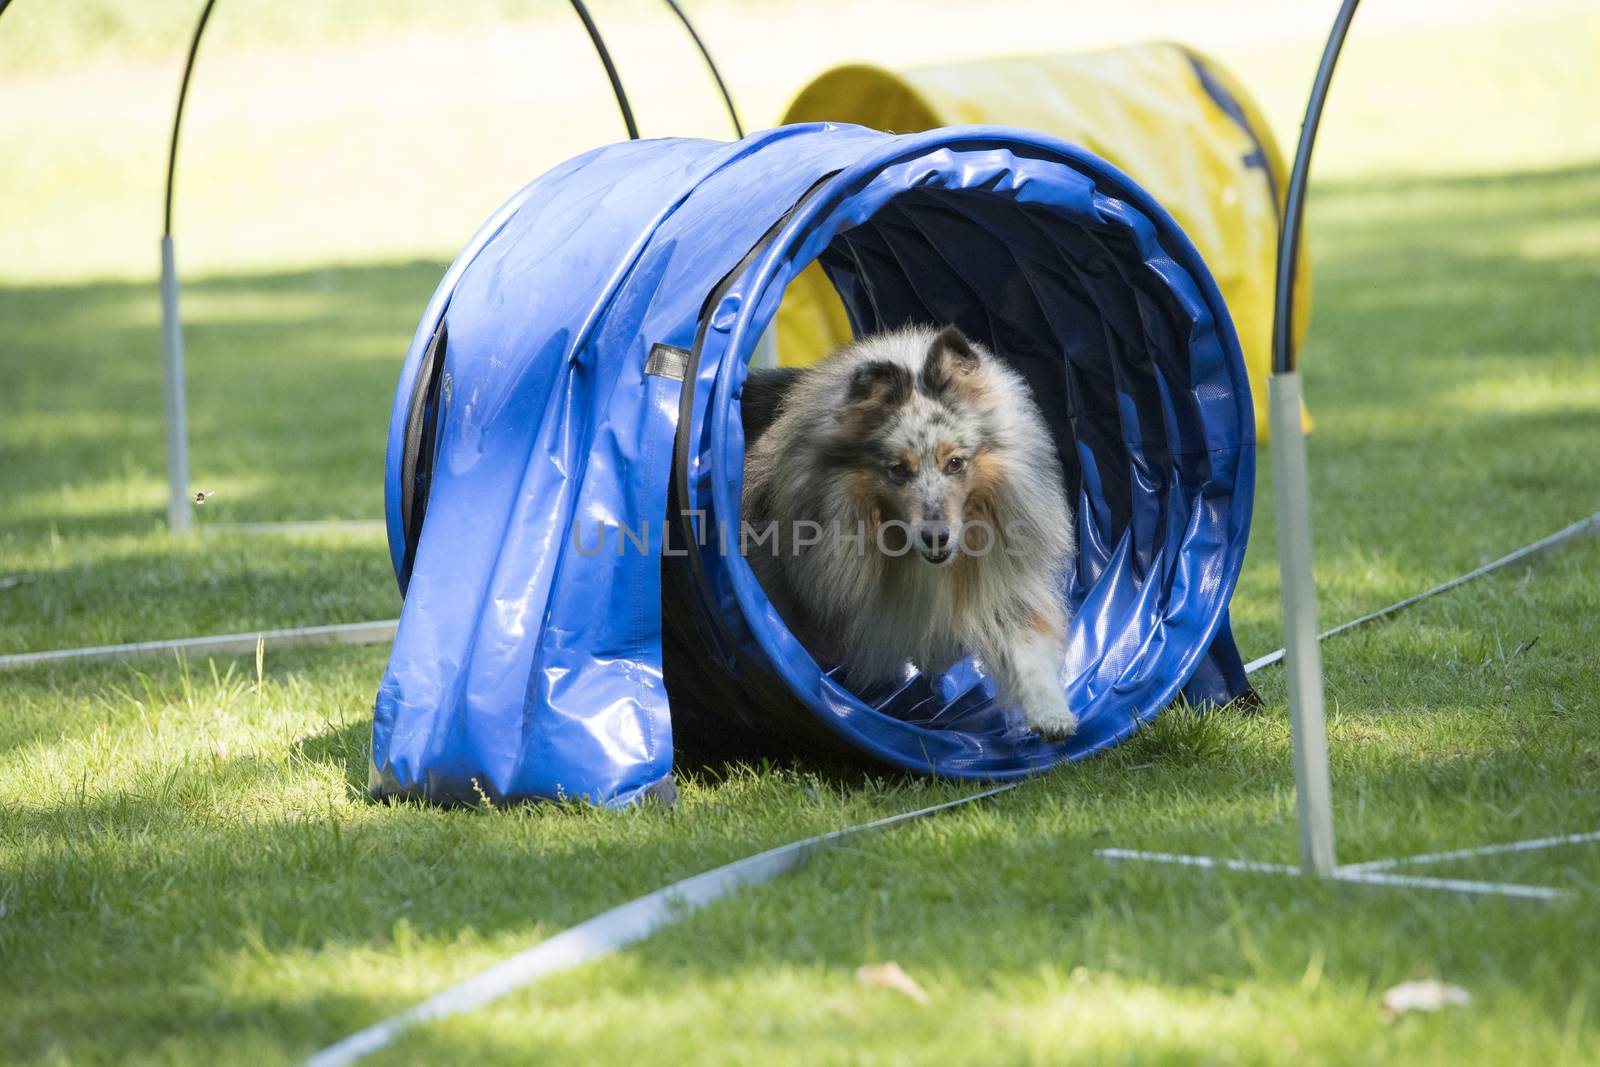 Dog, Shetland Sheepdog, running through agility tunnel, hooper training